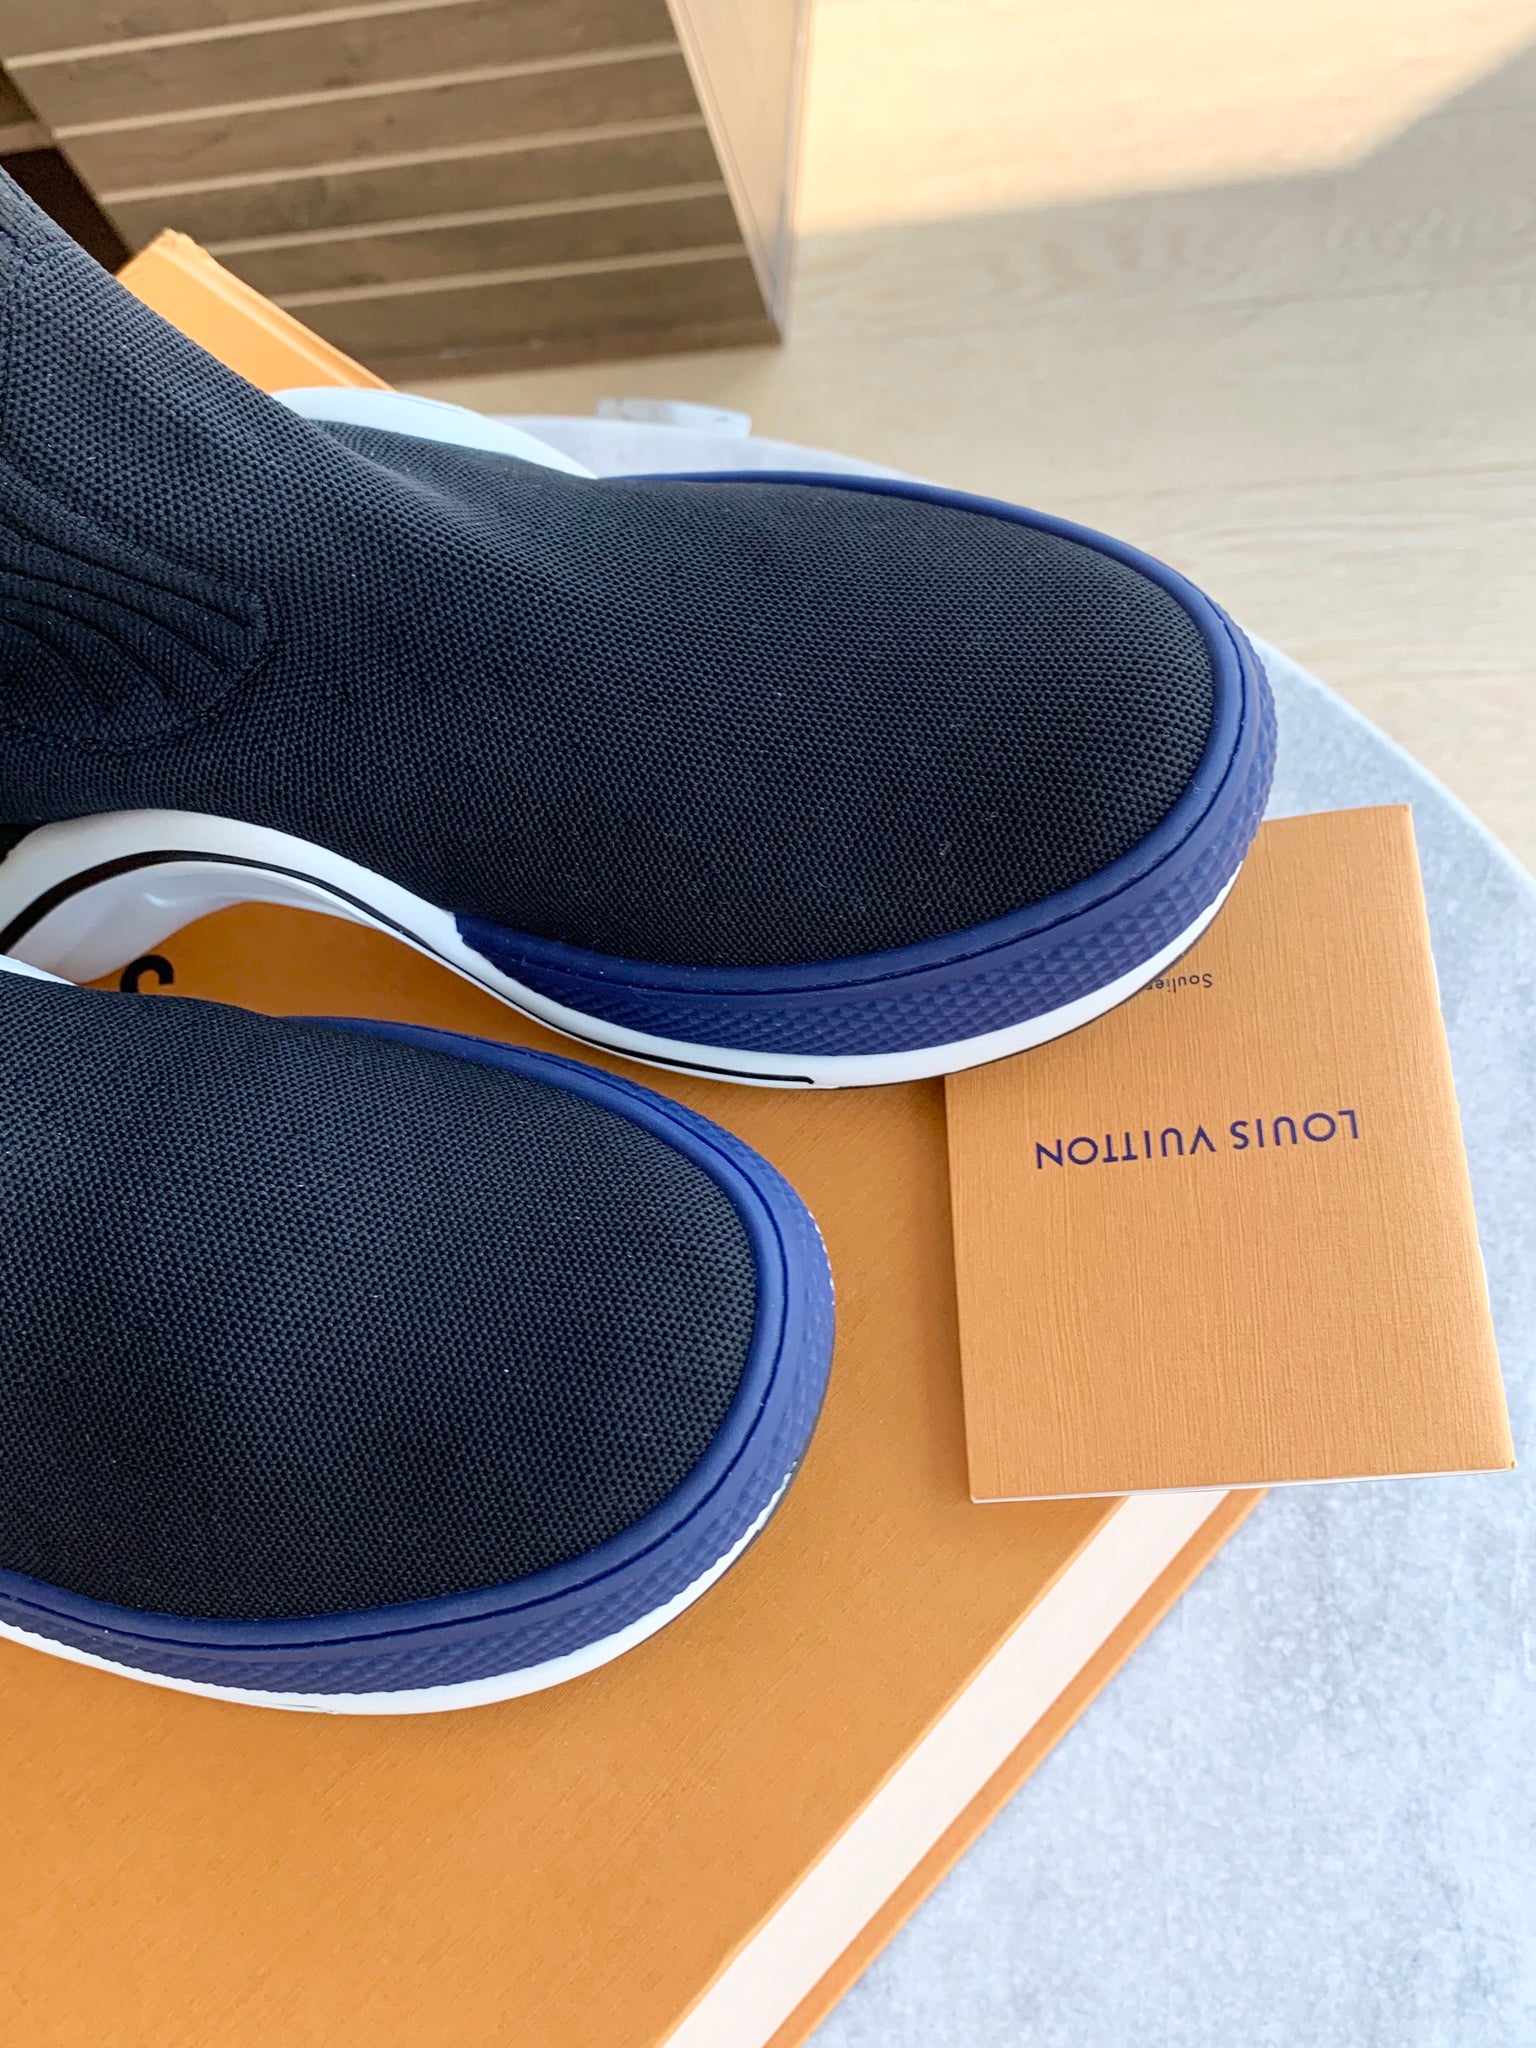 Louis Vuitton LV Archlight Stretch Textile Sneaker Boots in Black/Blue EU41